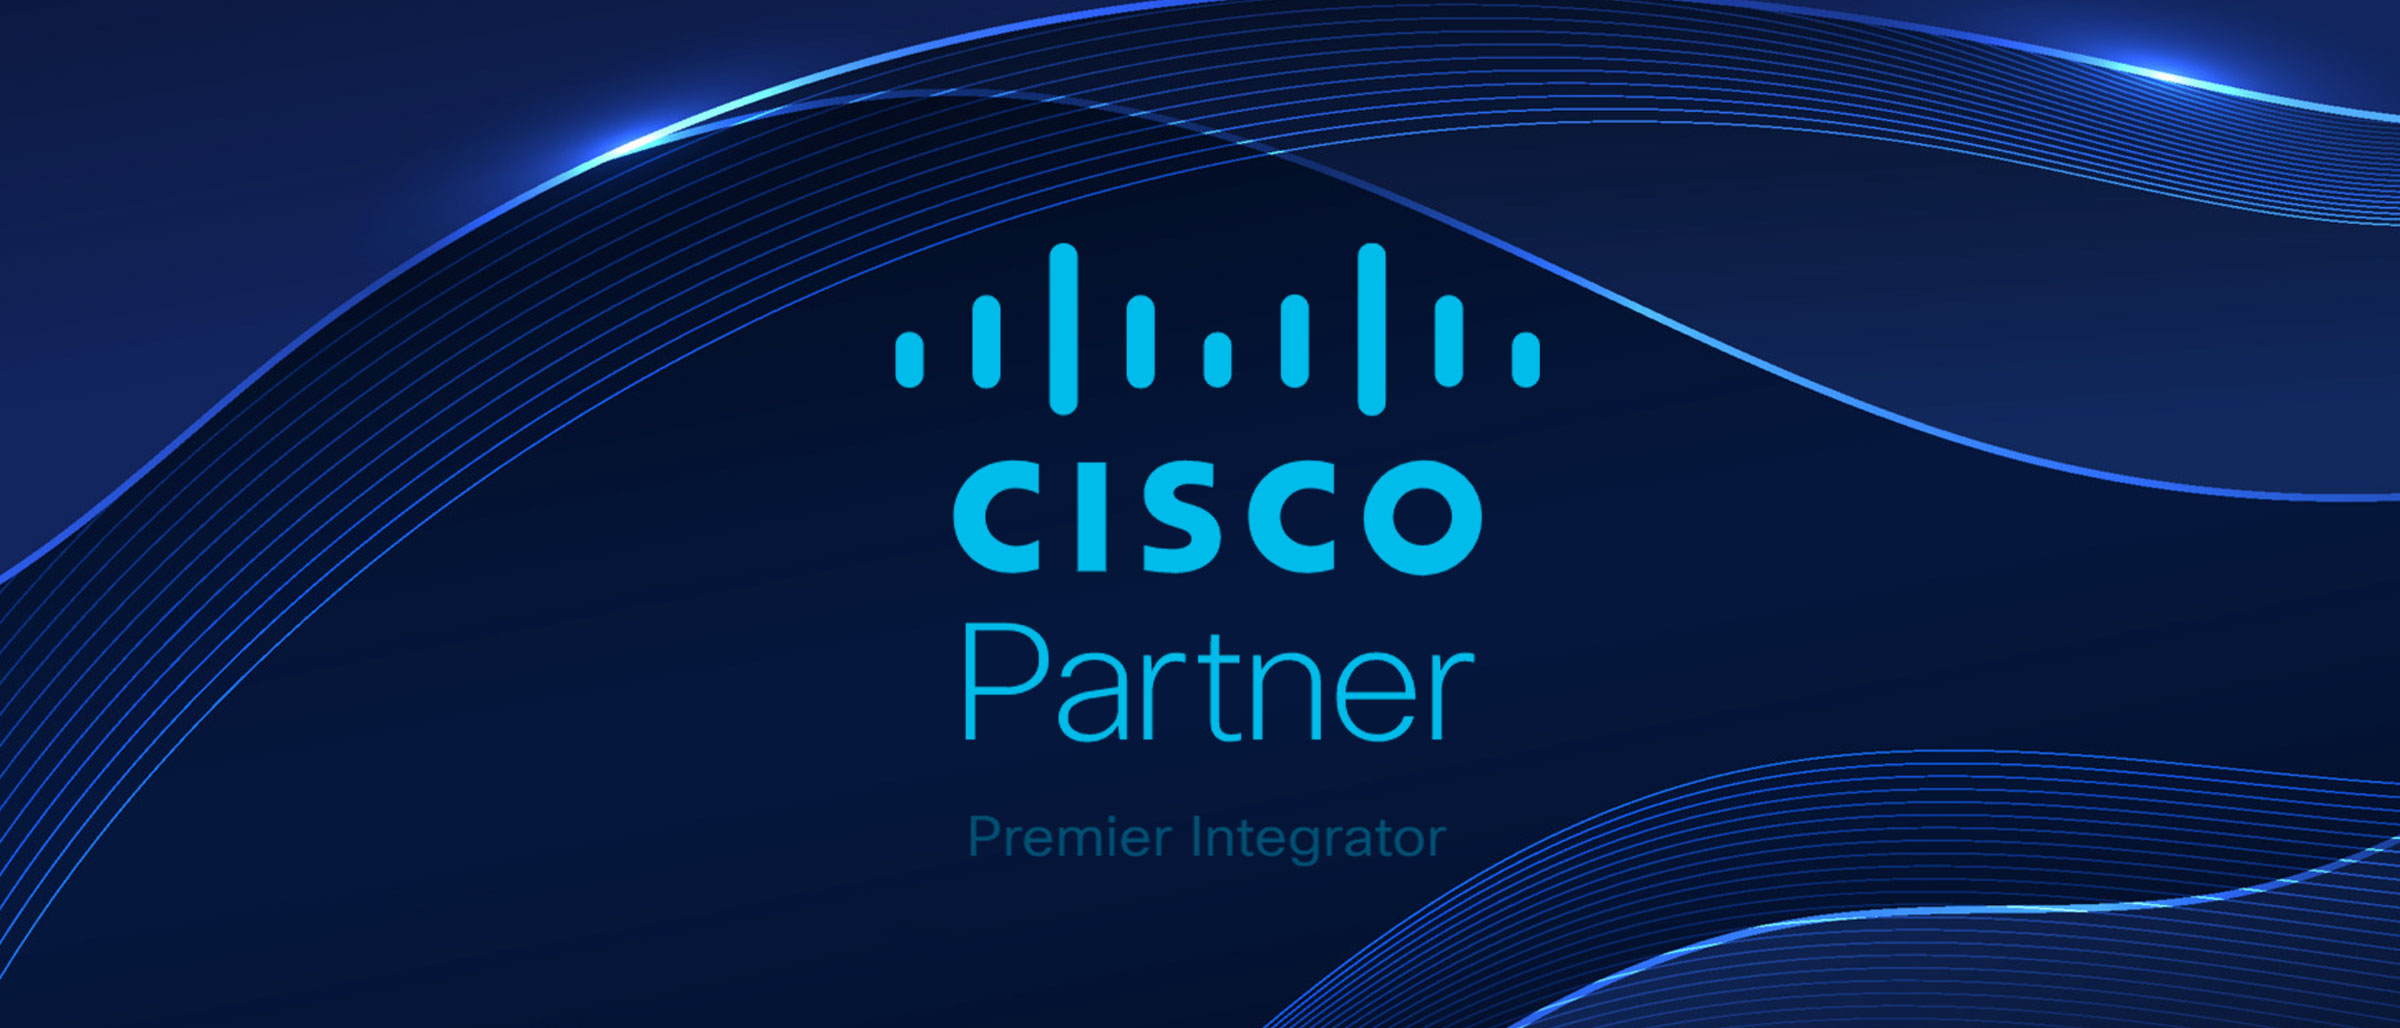 Cisco Partnership Logo